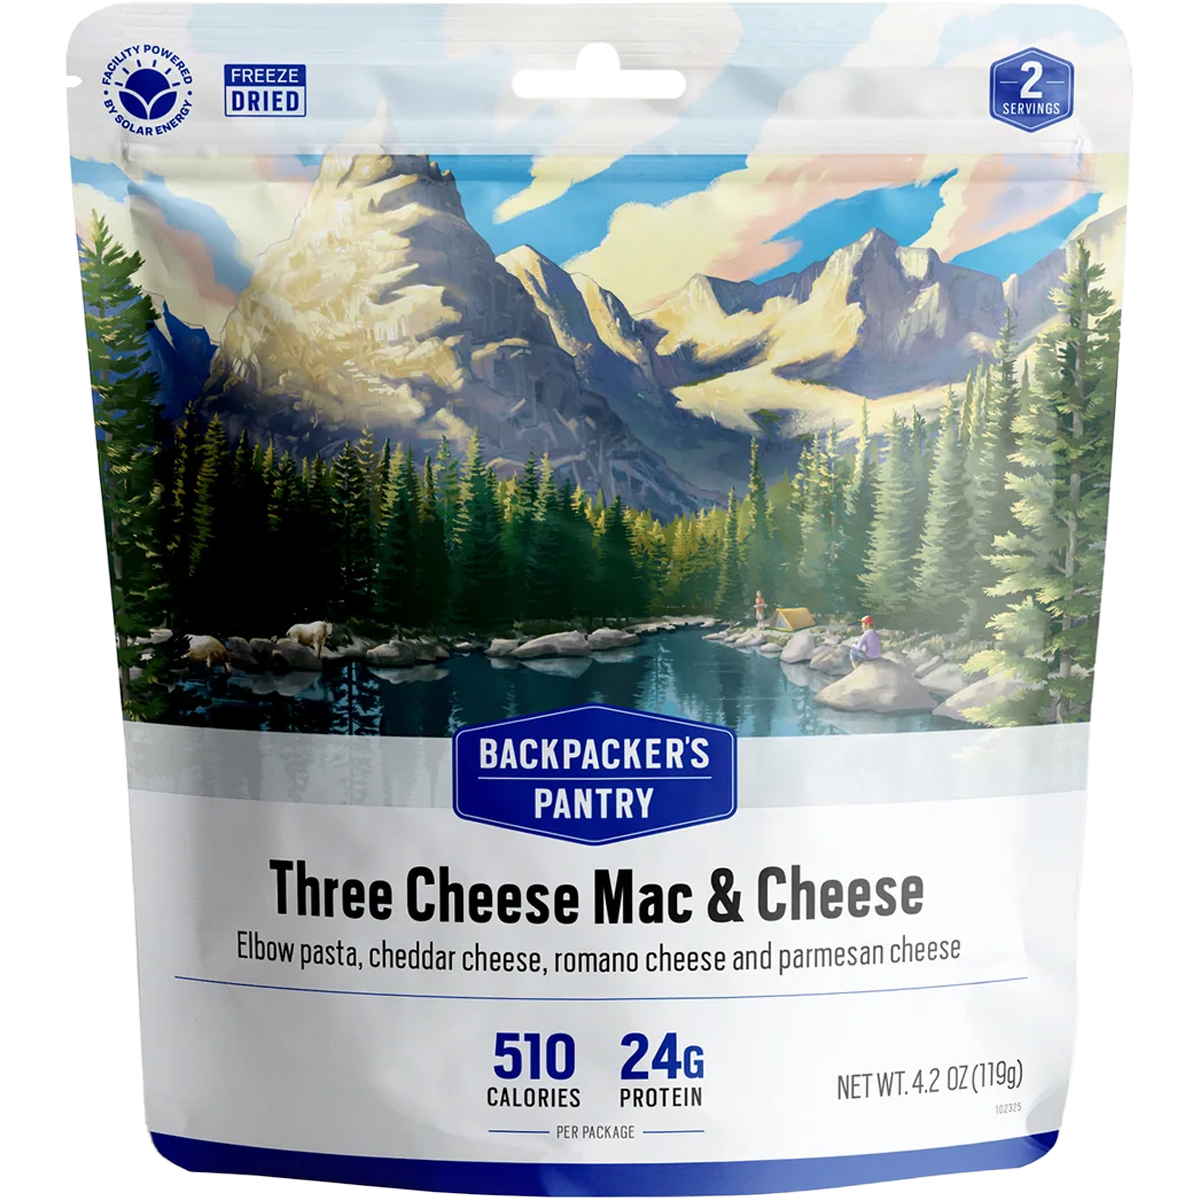 Three Cheese Mac & Cheese (2 Servings) alternate view